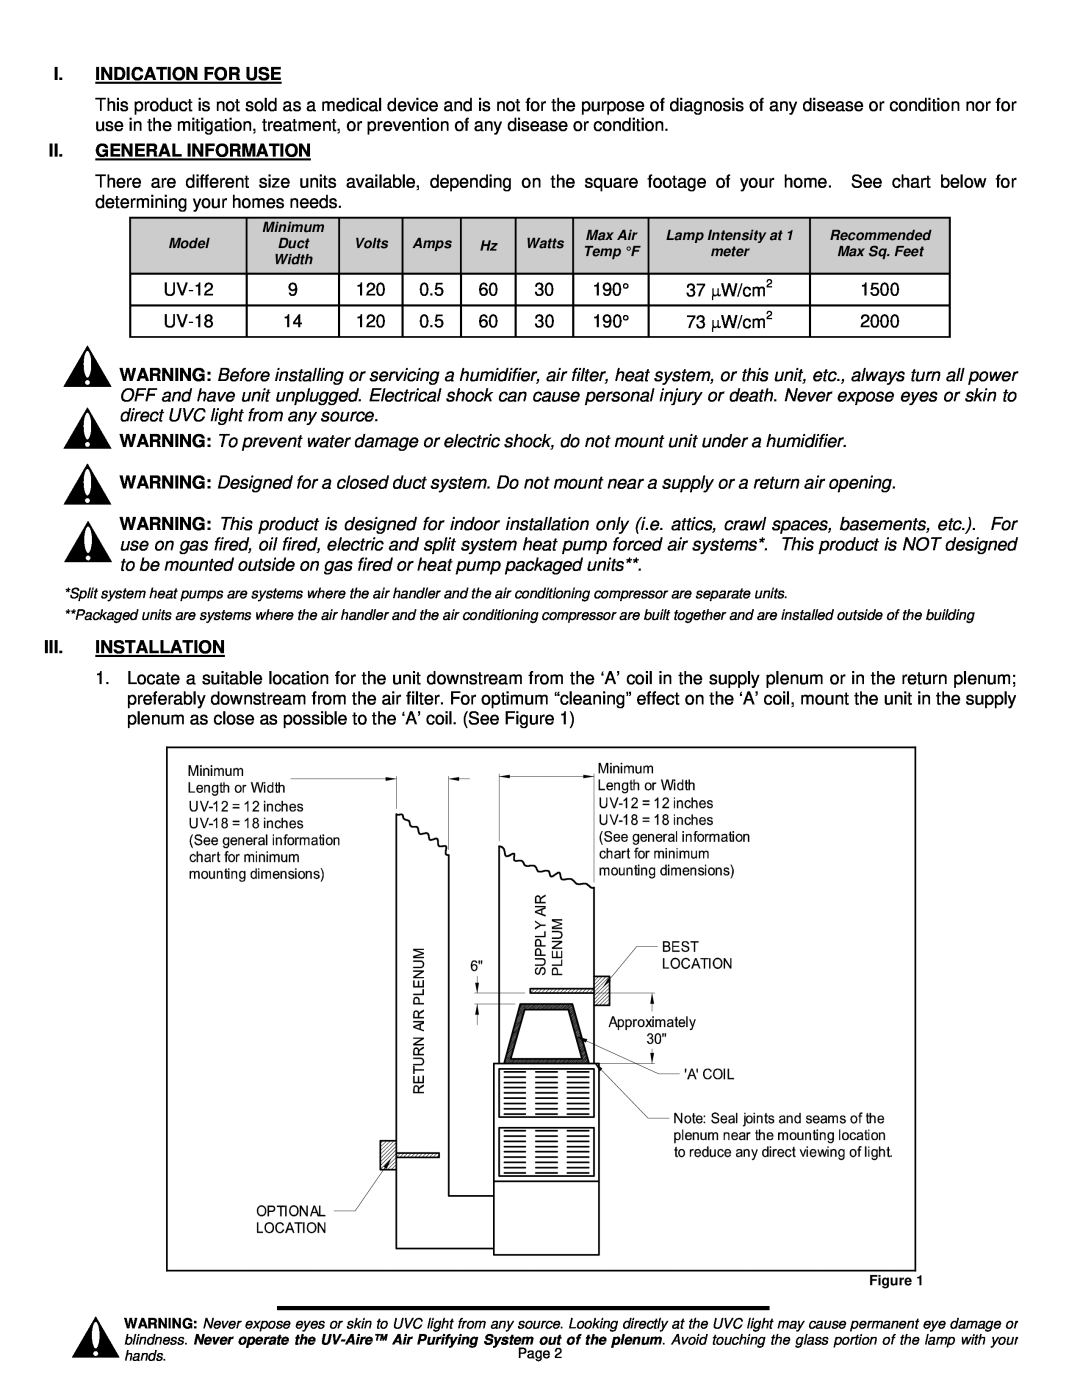 Field Controls UV-18, UV-12 installation instructions I.Indication For Use, Ii.General Information, Iii.Installation 